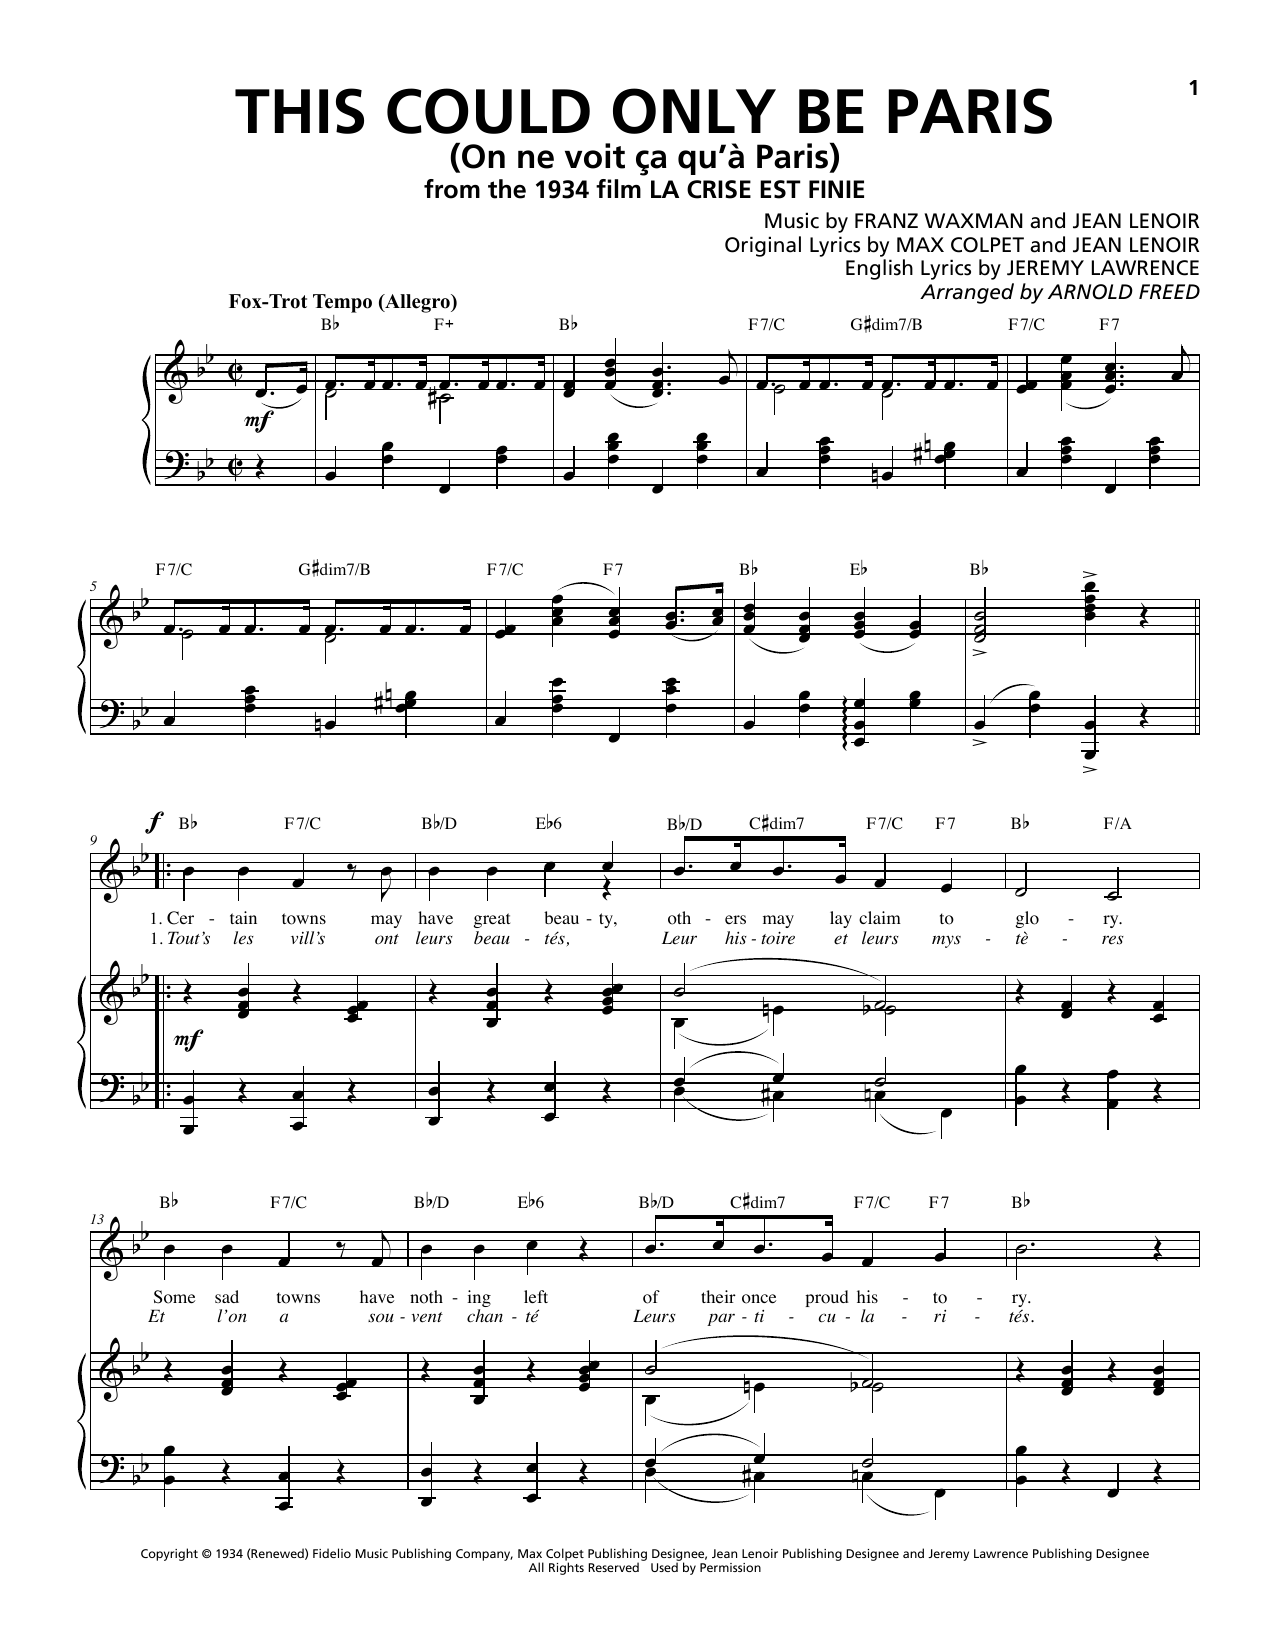 Franz Waxman This Could Only Be Paris (On ne voit ça qu'à Paris) Sheet Music Notes & Chords for Piano & Vocal - Download or Print PDF